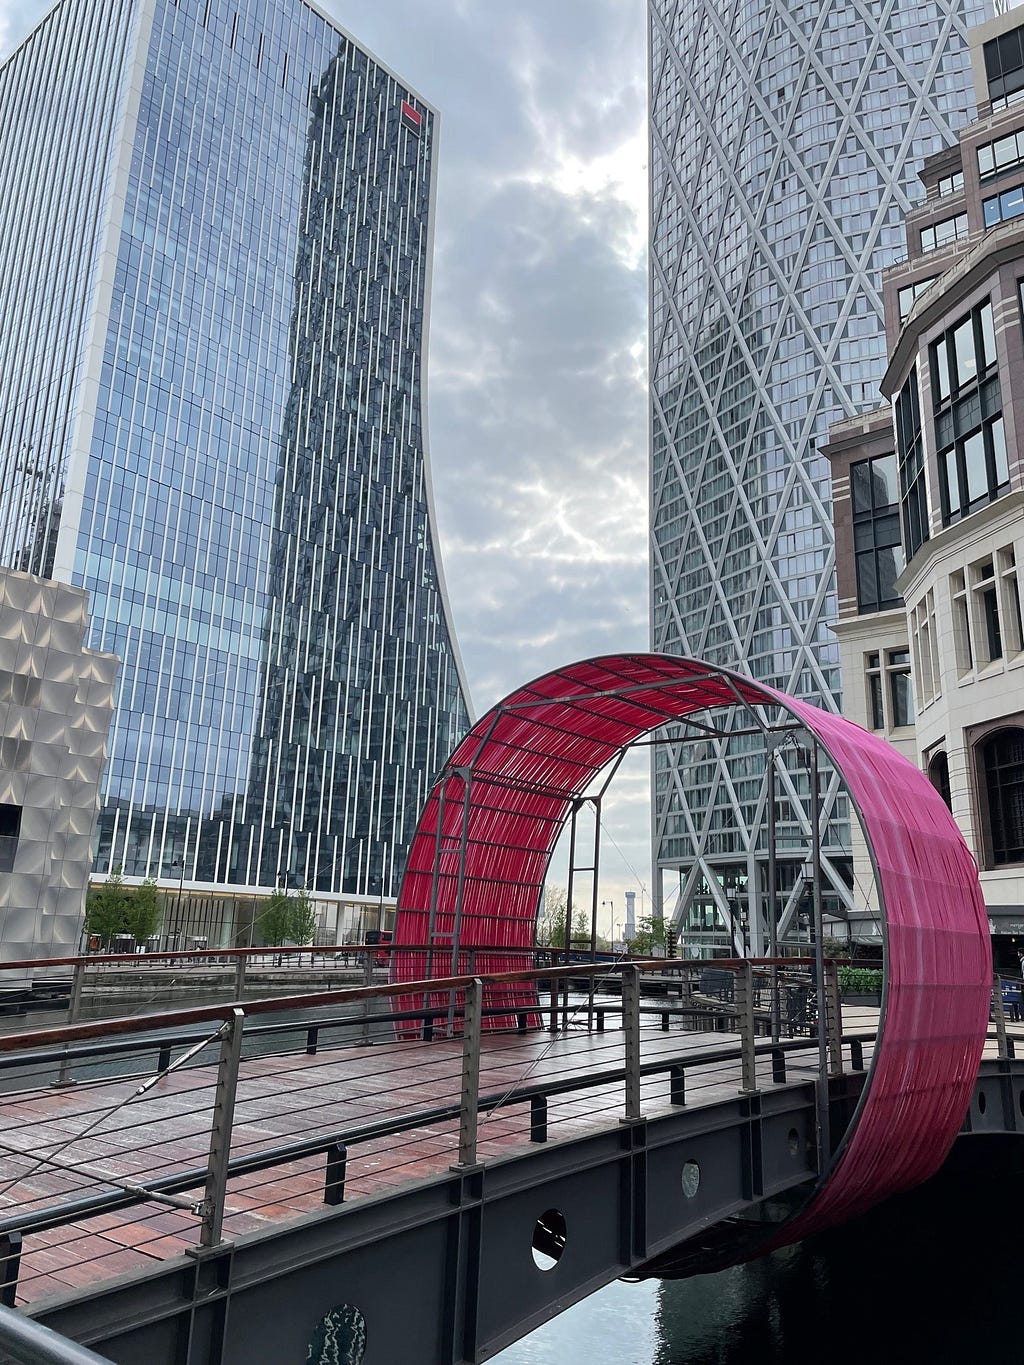 A circular sculpture over a bridge in Canary Wharf, London